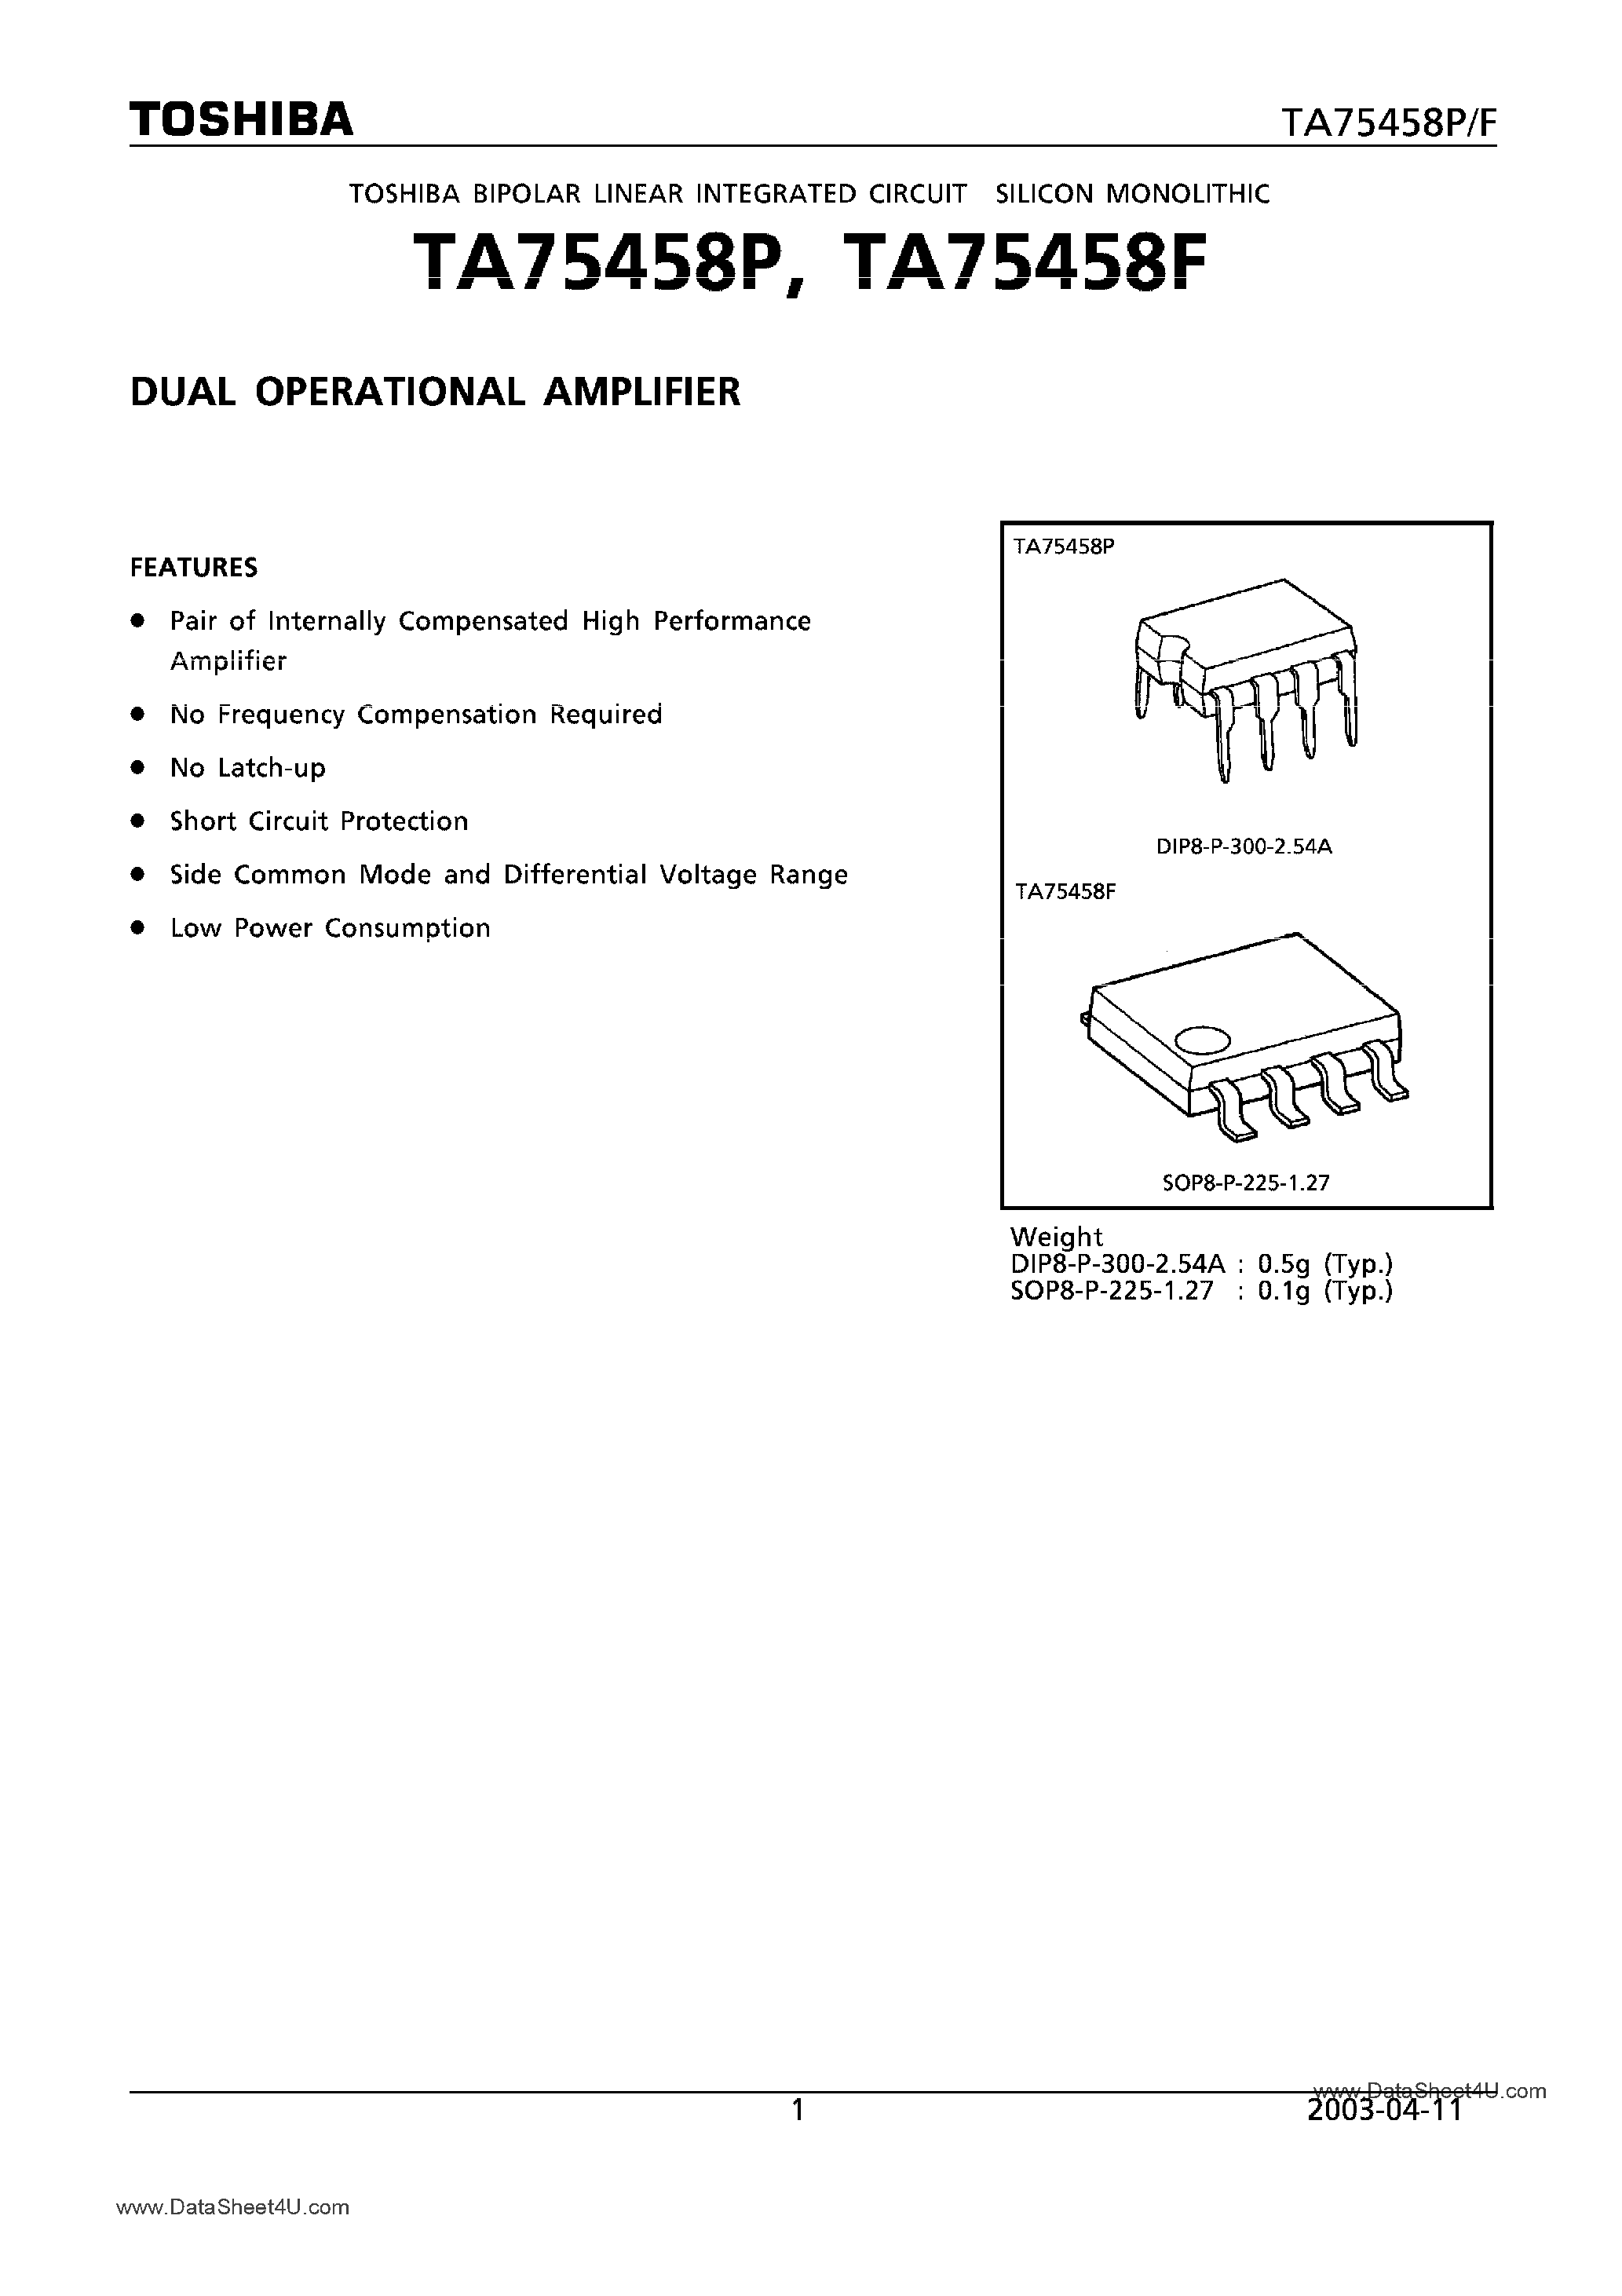 Datasheet TA75458F - (TA75458P/F) DUAL OPERATIONAL AMPLIFIER page 1